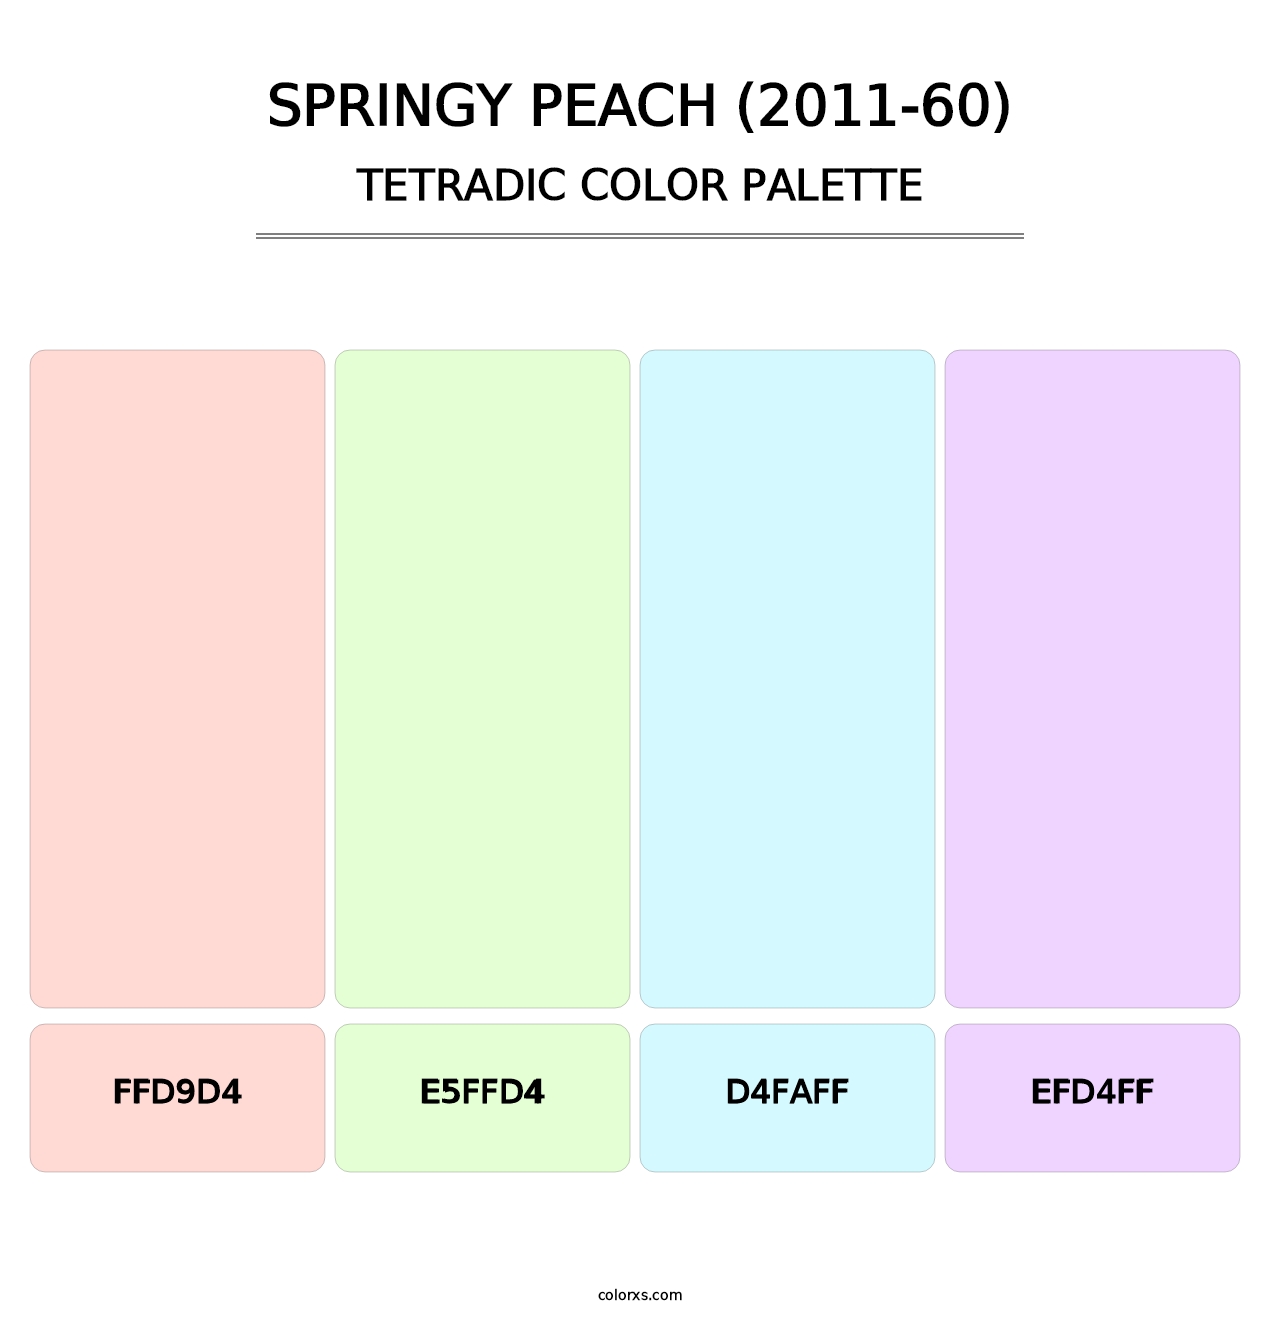 Springy Peach (2011-60) - Tetradic Color Palette